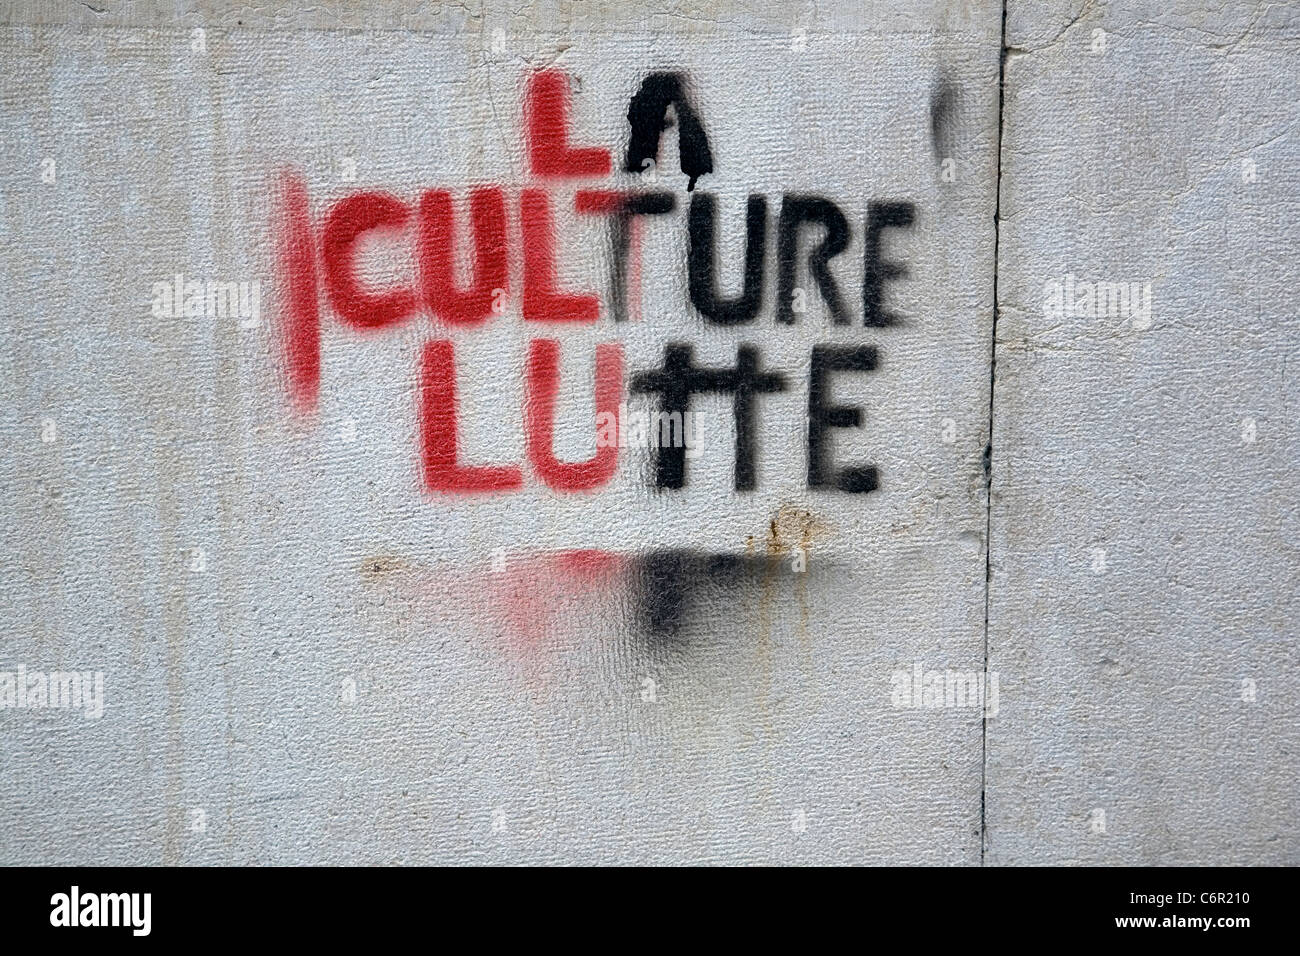 La Culture Lutte Stock Photo